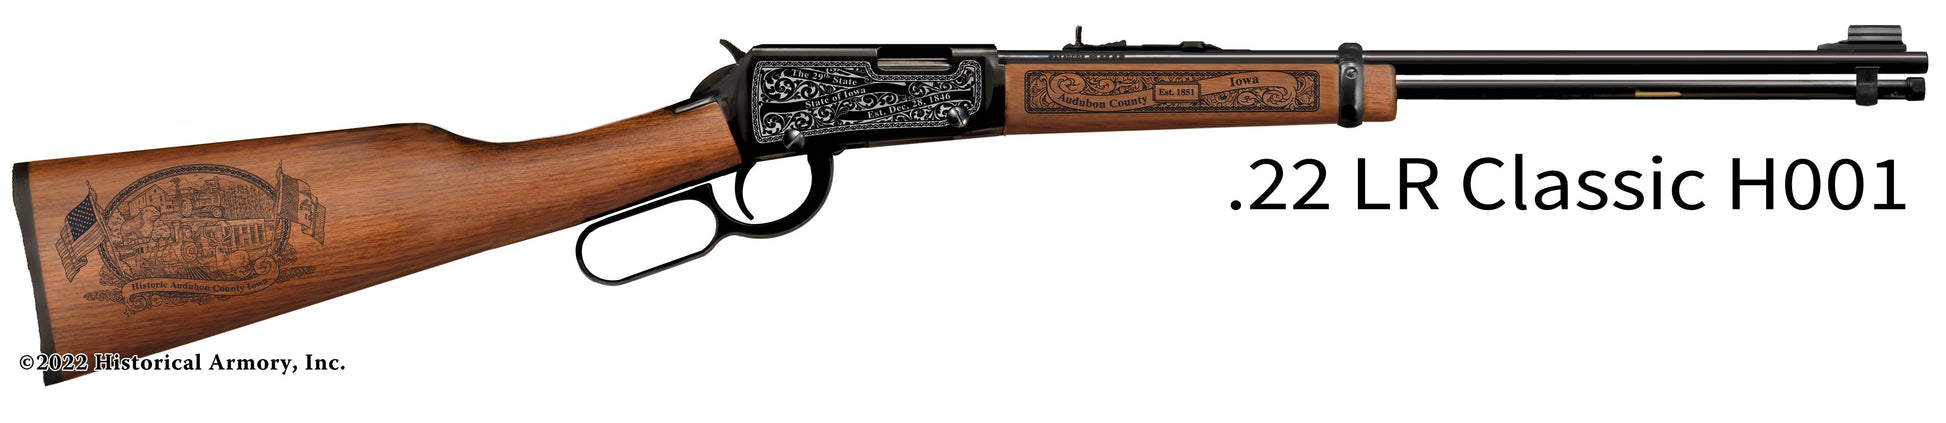 Audubon County Iowa Engraved Henry H001 Rifle